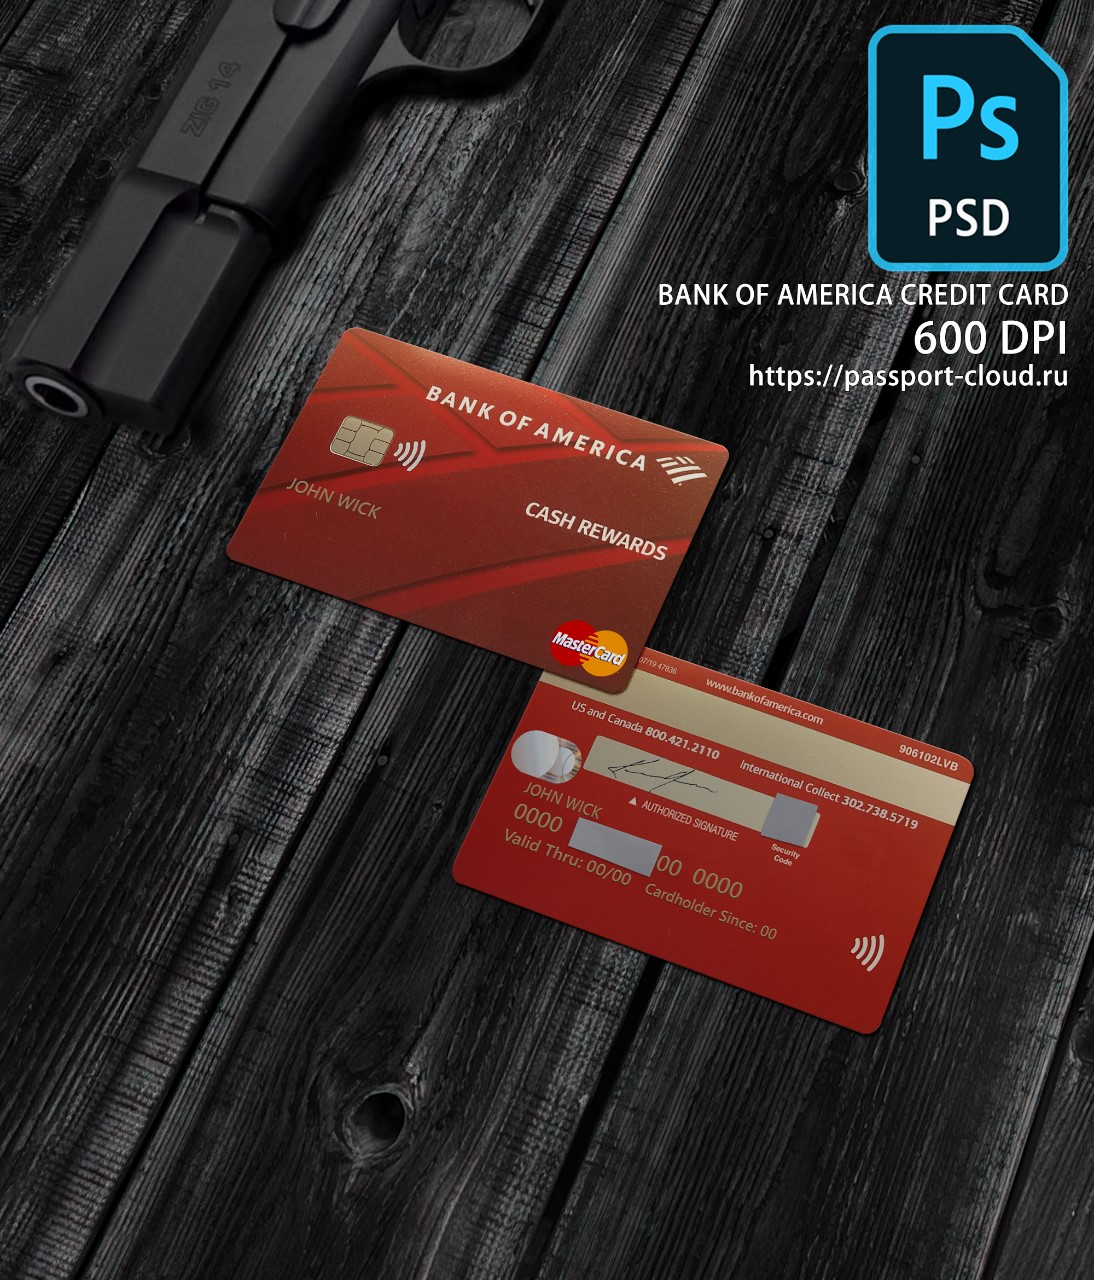 Bank of America Credit Card PSD1